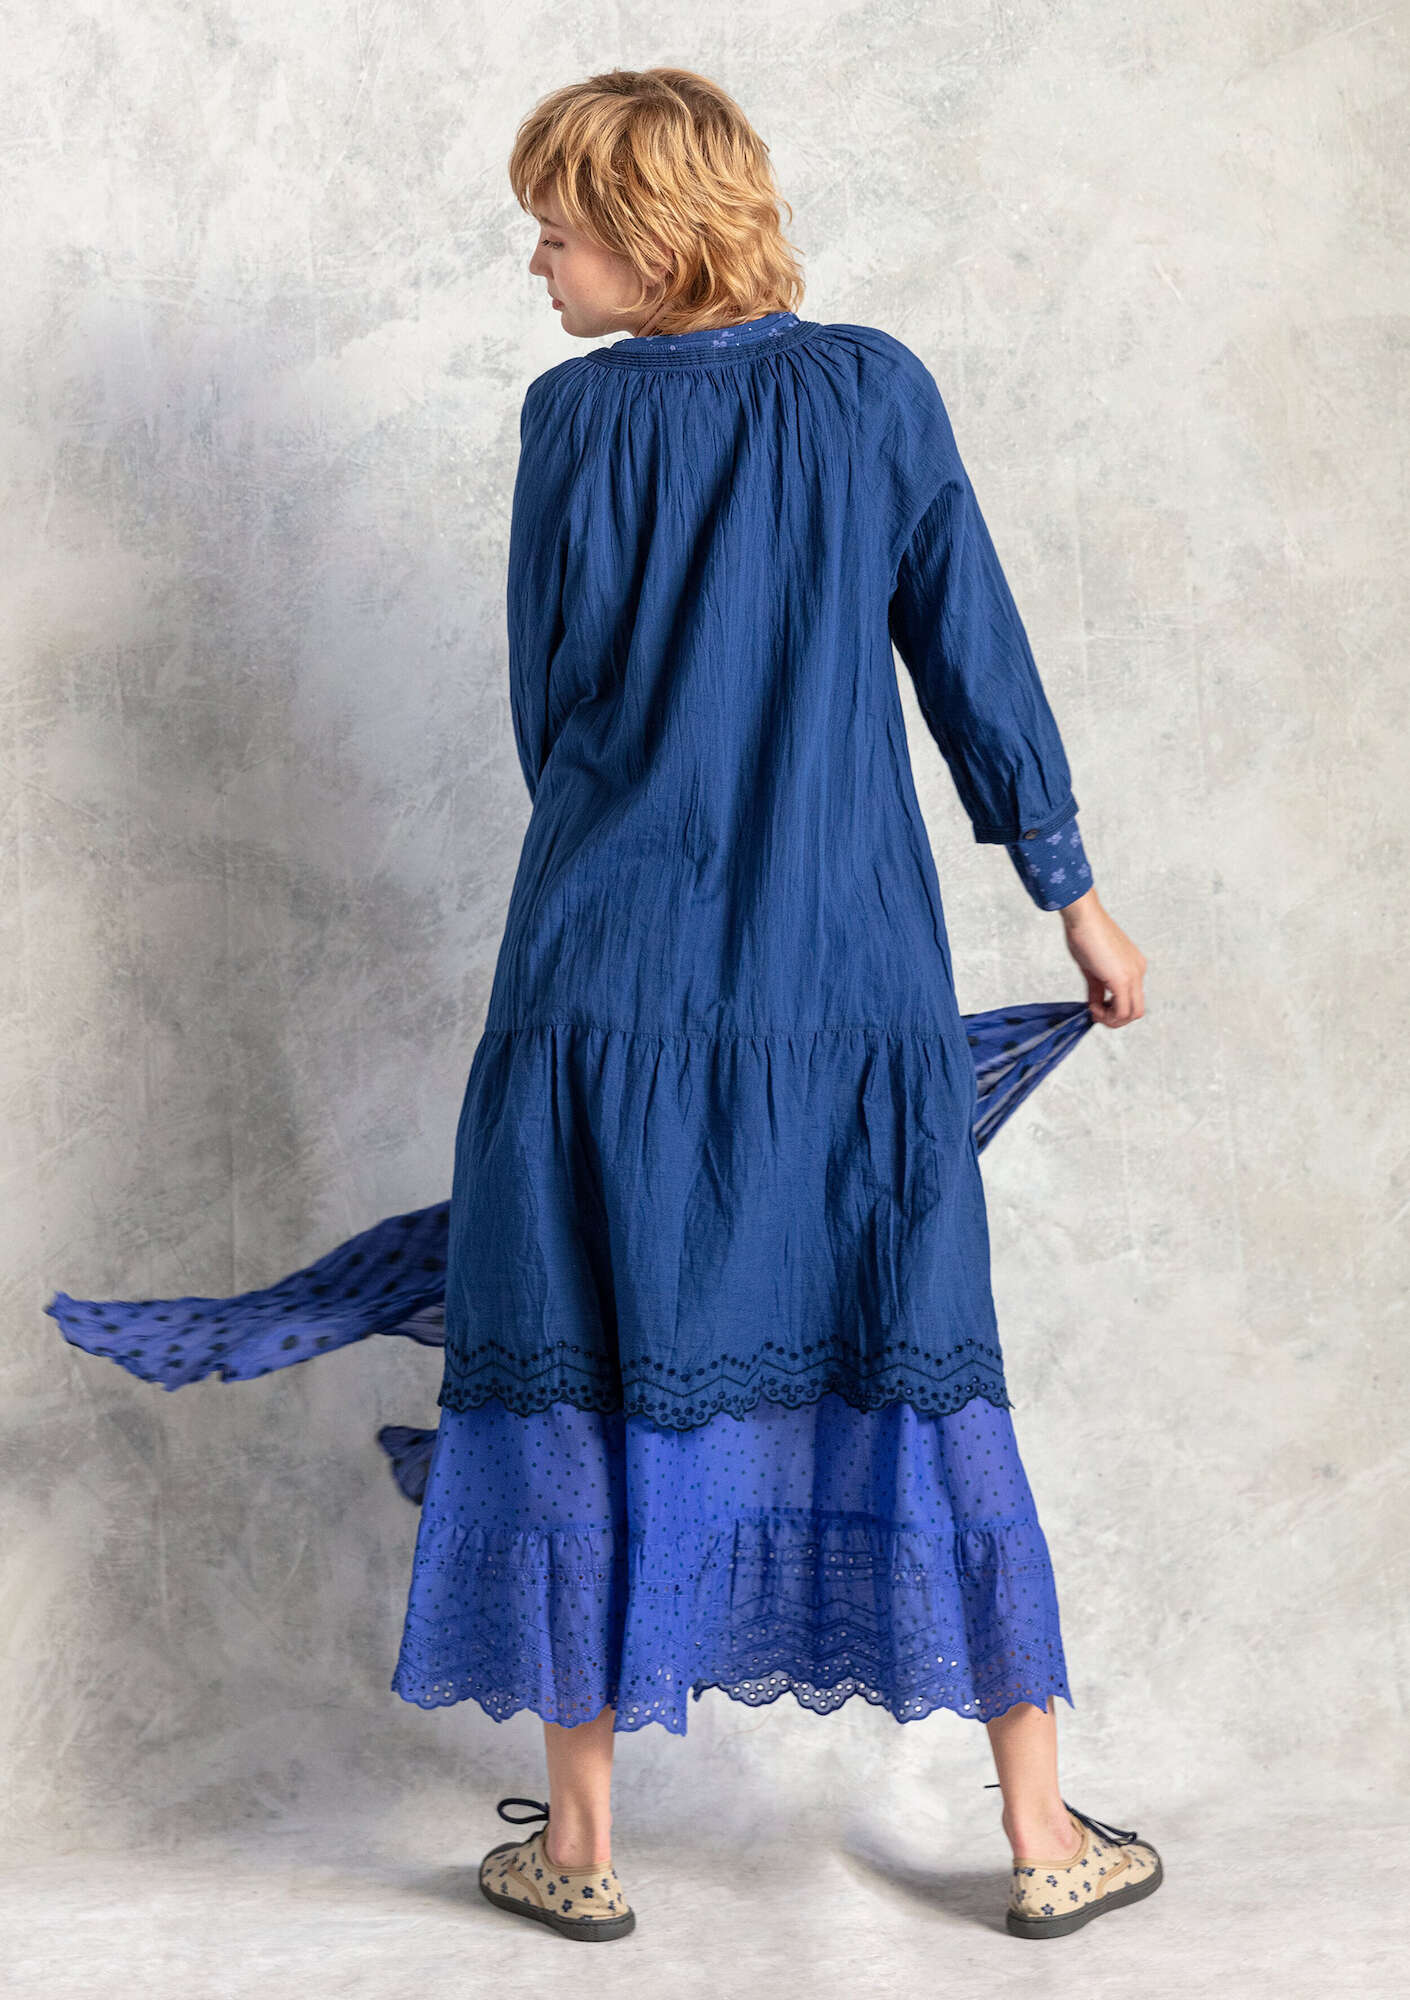 Woven dress in organic cotton indigo blue